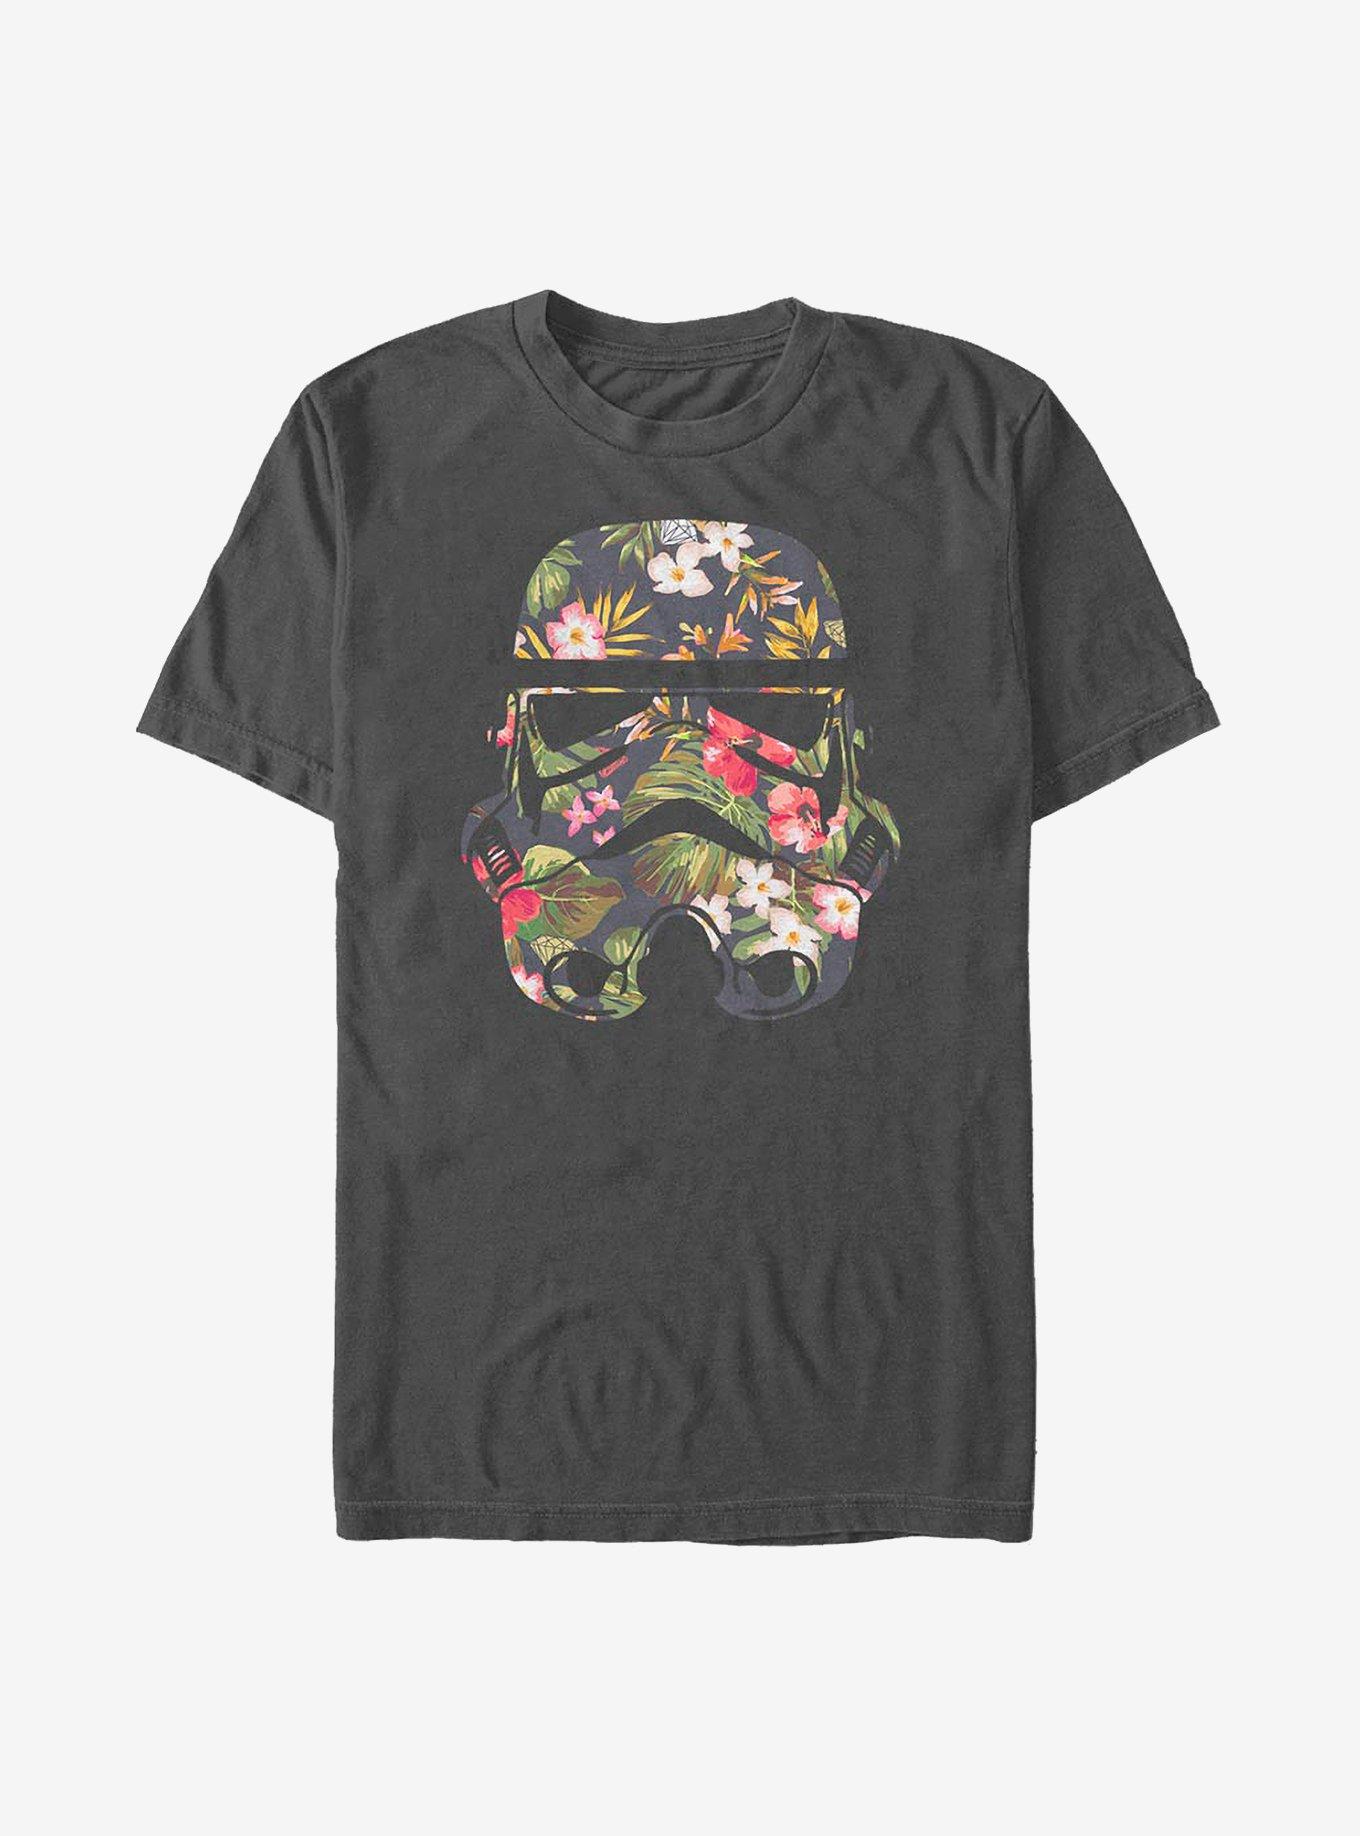 Star Wars Storm Flowers T-Shirt, CHARCOAL, hi-res